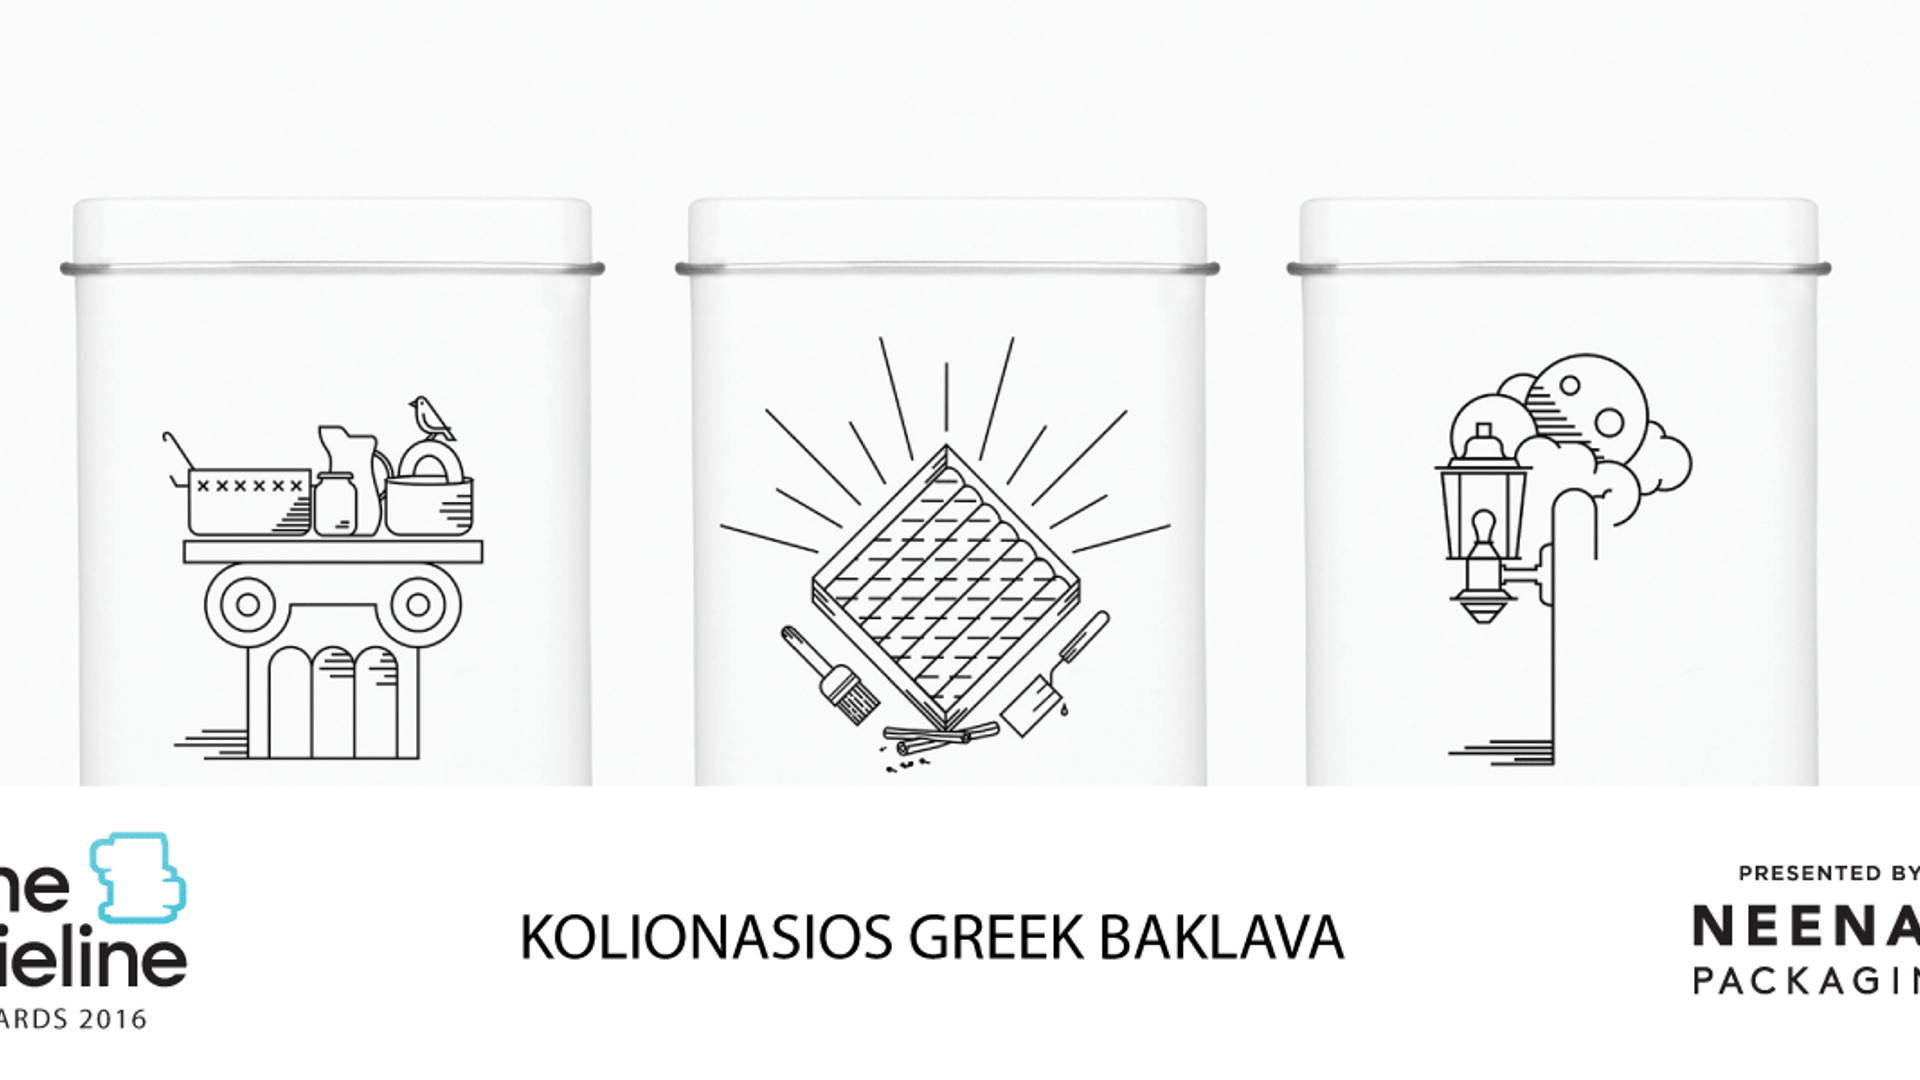 Featured image for The Dieline Awards 2016 Outstanding Achievements: Kolionasios Greek Baklava 